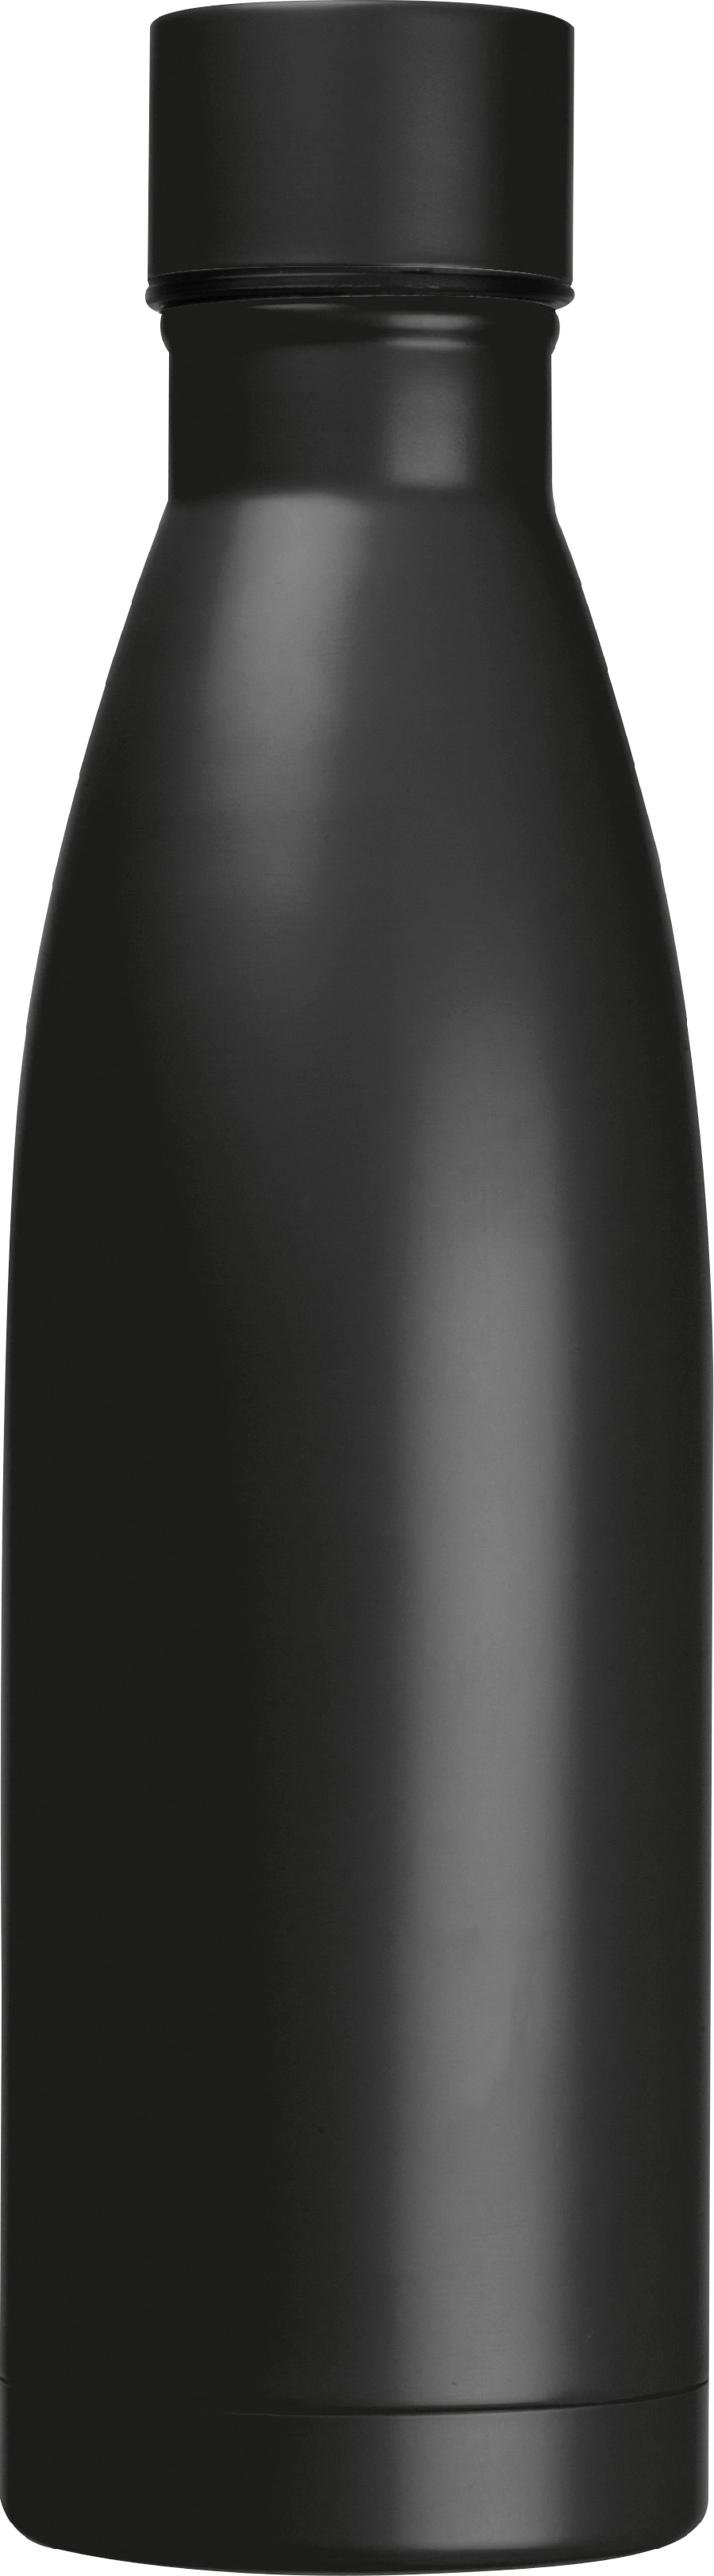 Butelka termiczna 500 ml GM-62573-03